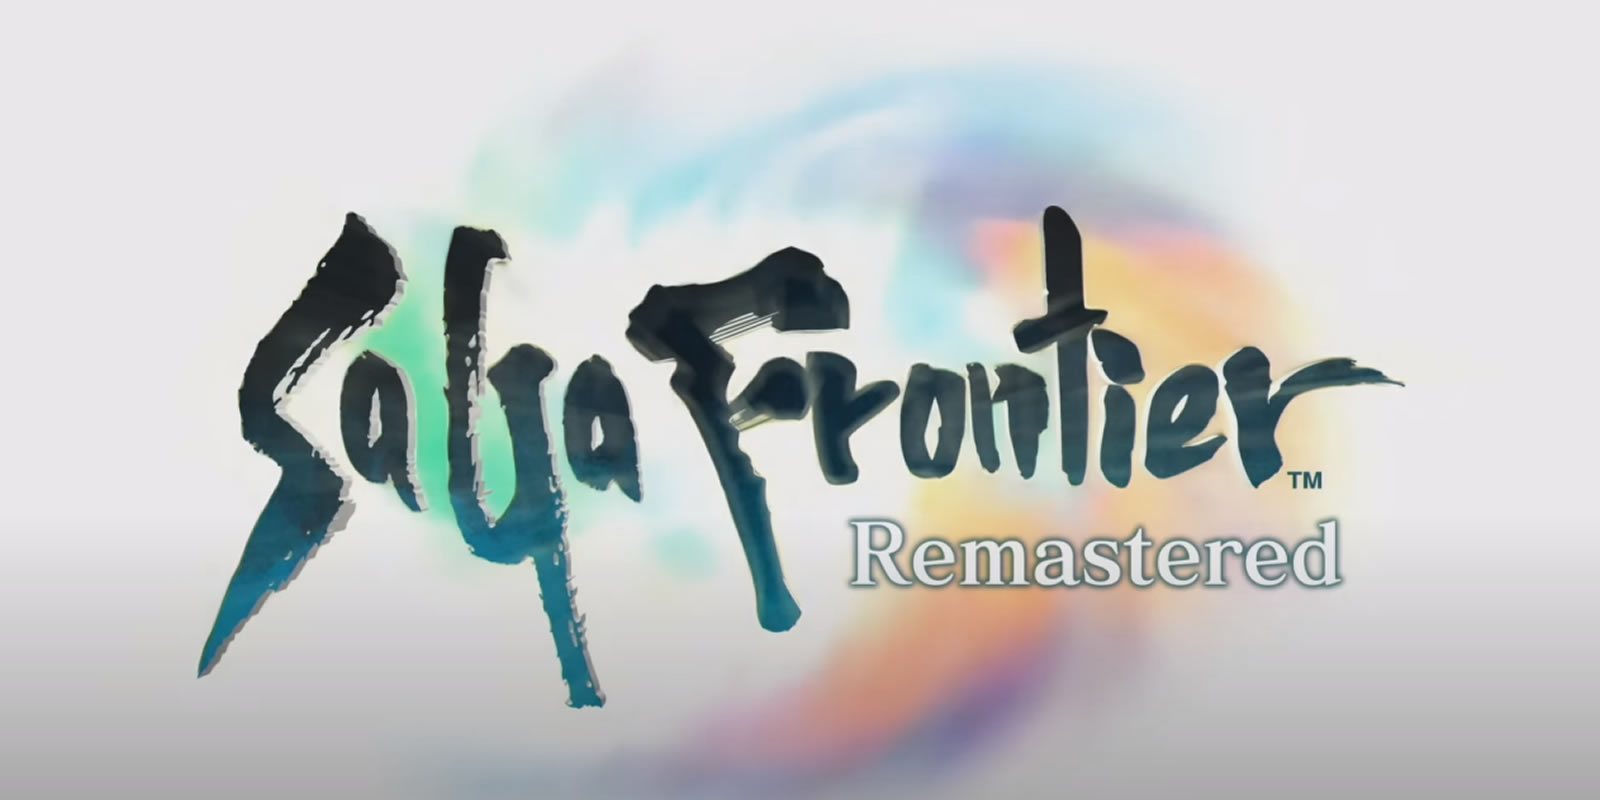 saga frontier remastered apk